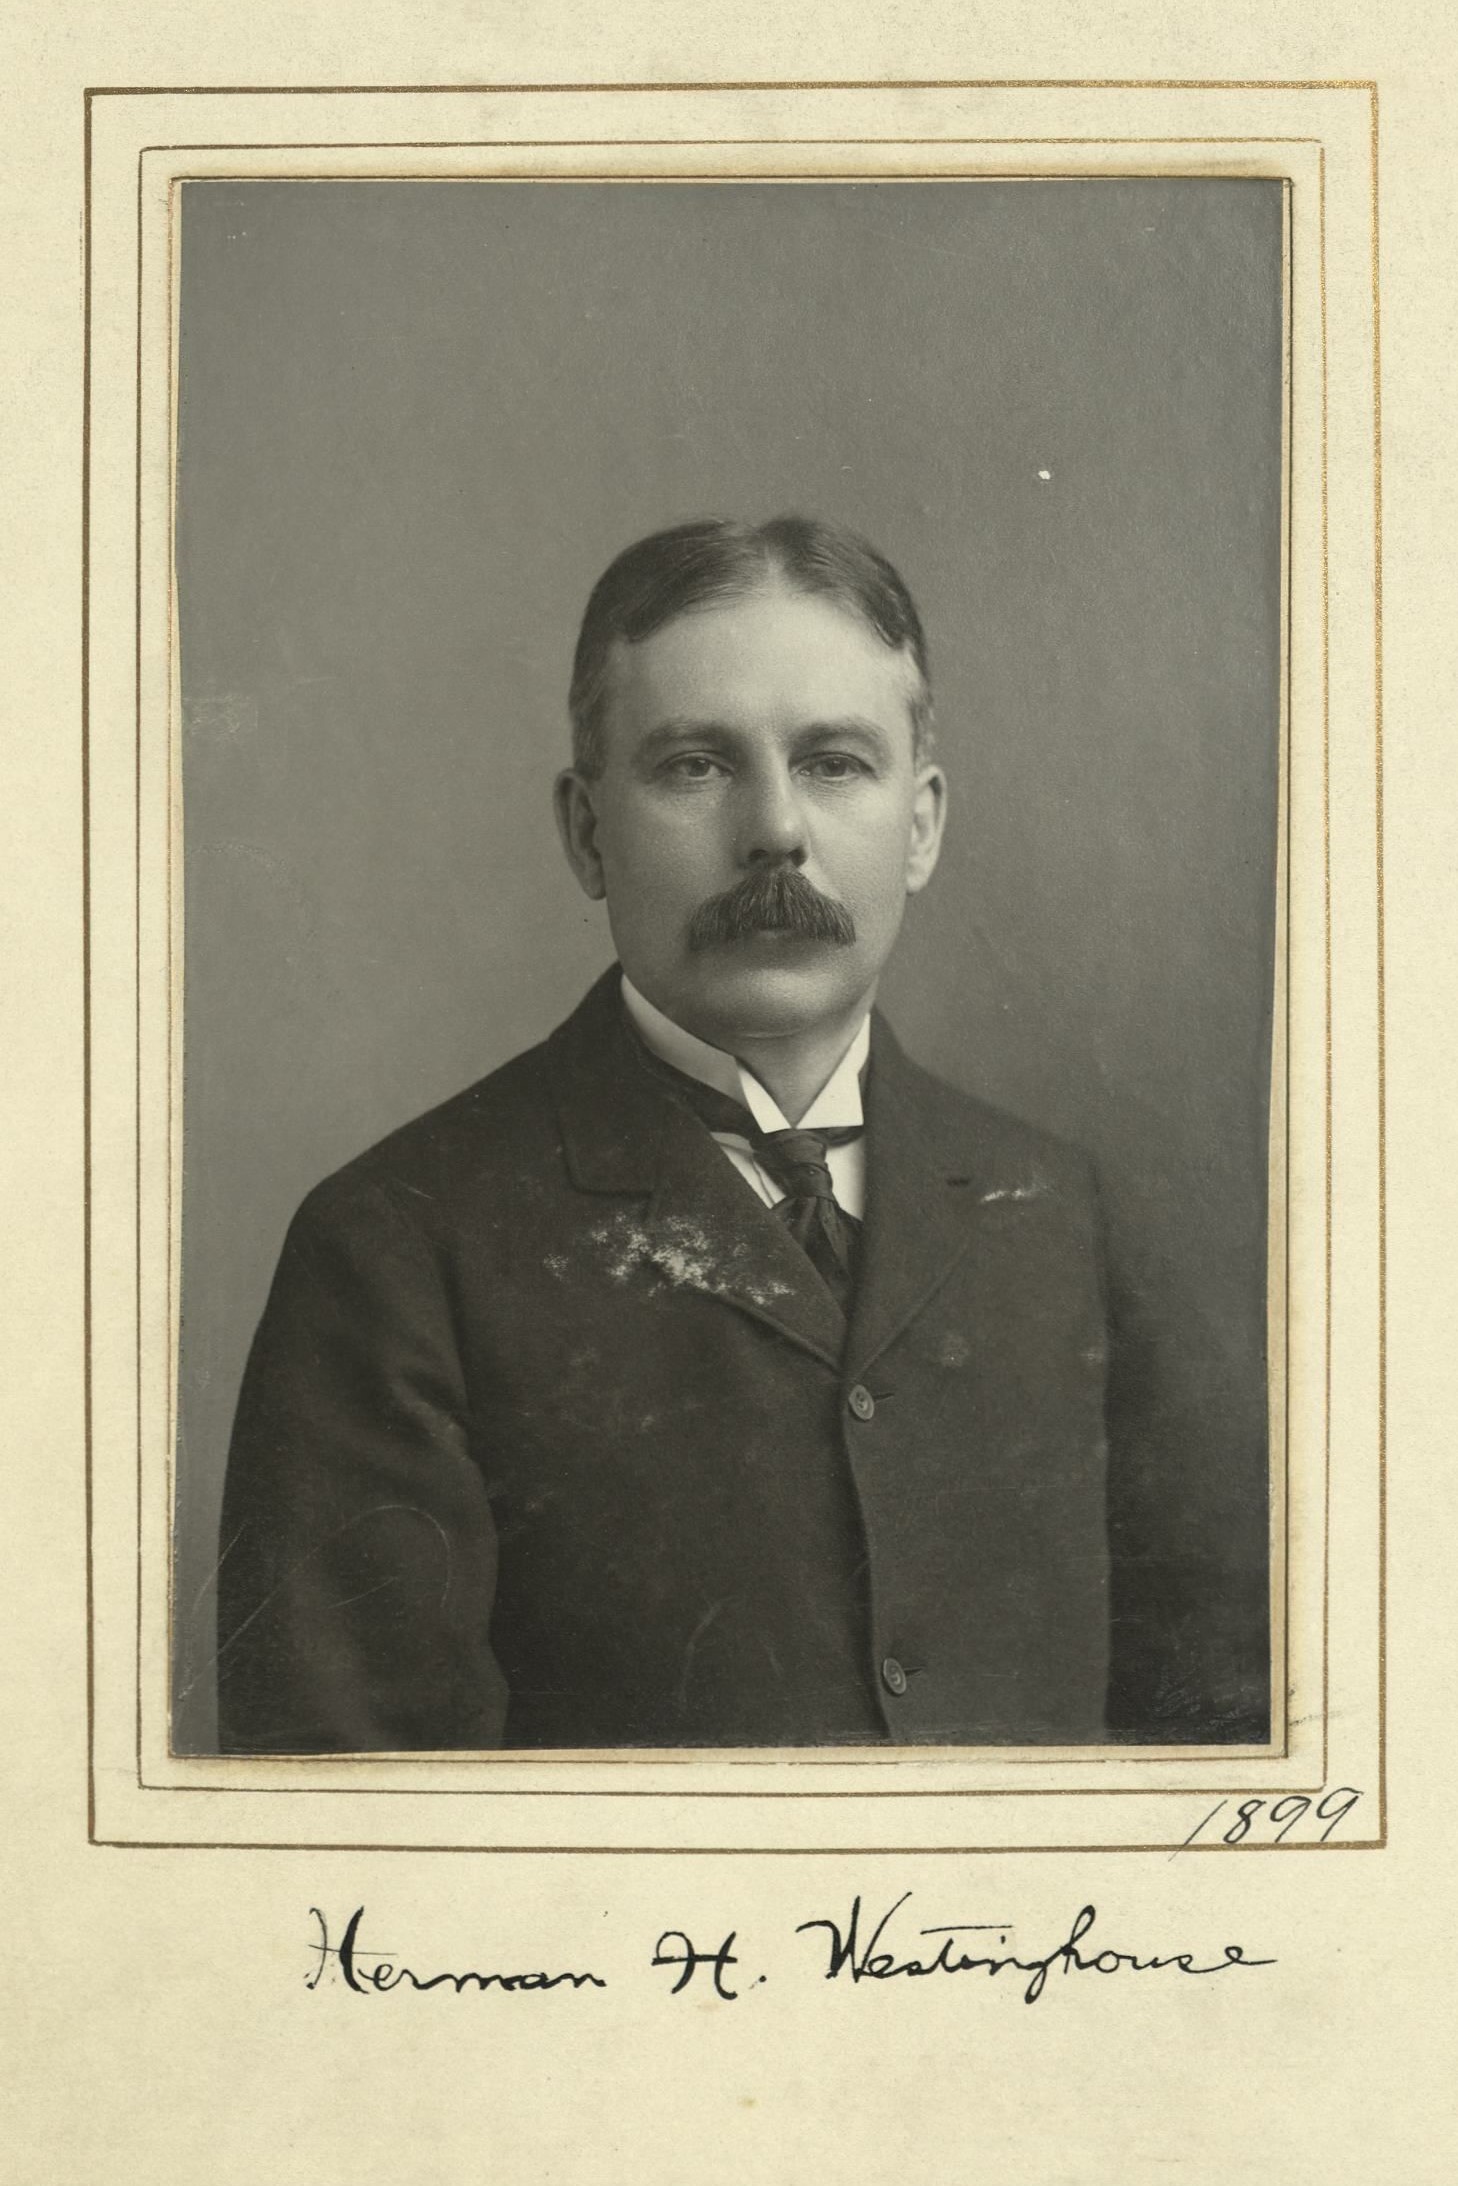 Member portrait of Herman H. Westinghouse